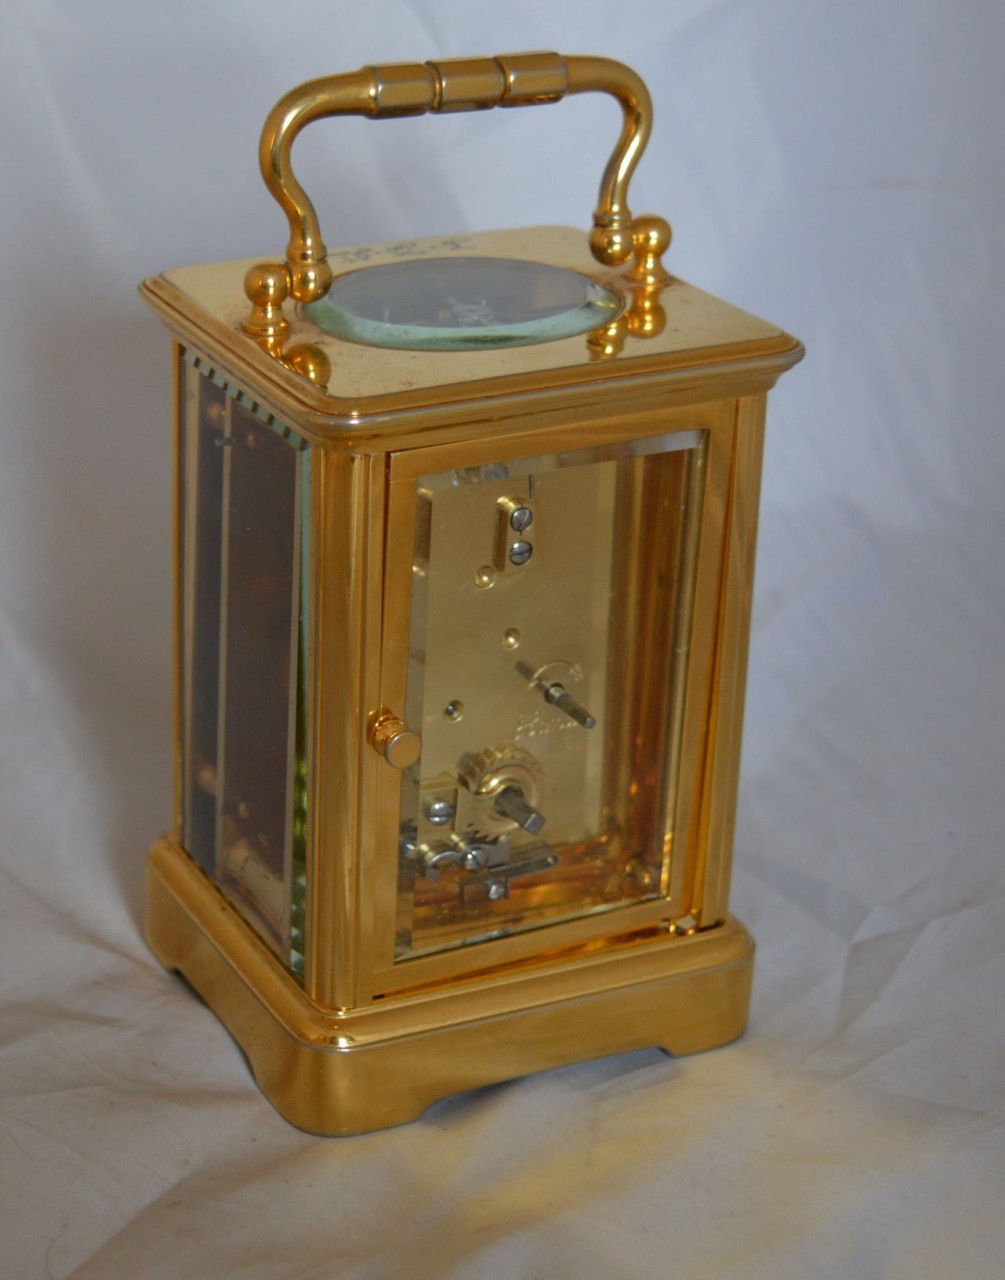 Richard & Co Carriage Clock, Gilded Case - Blog